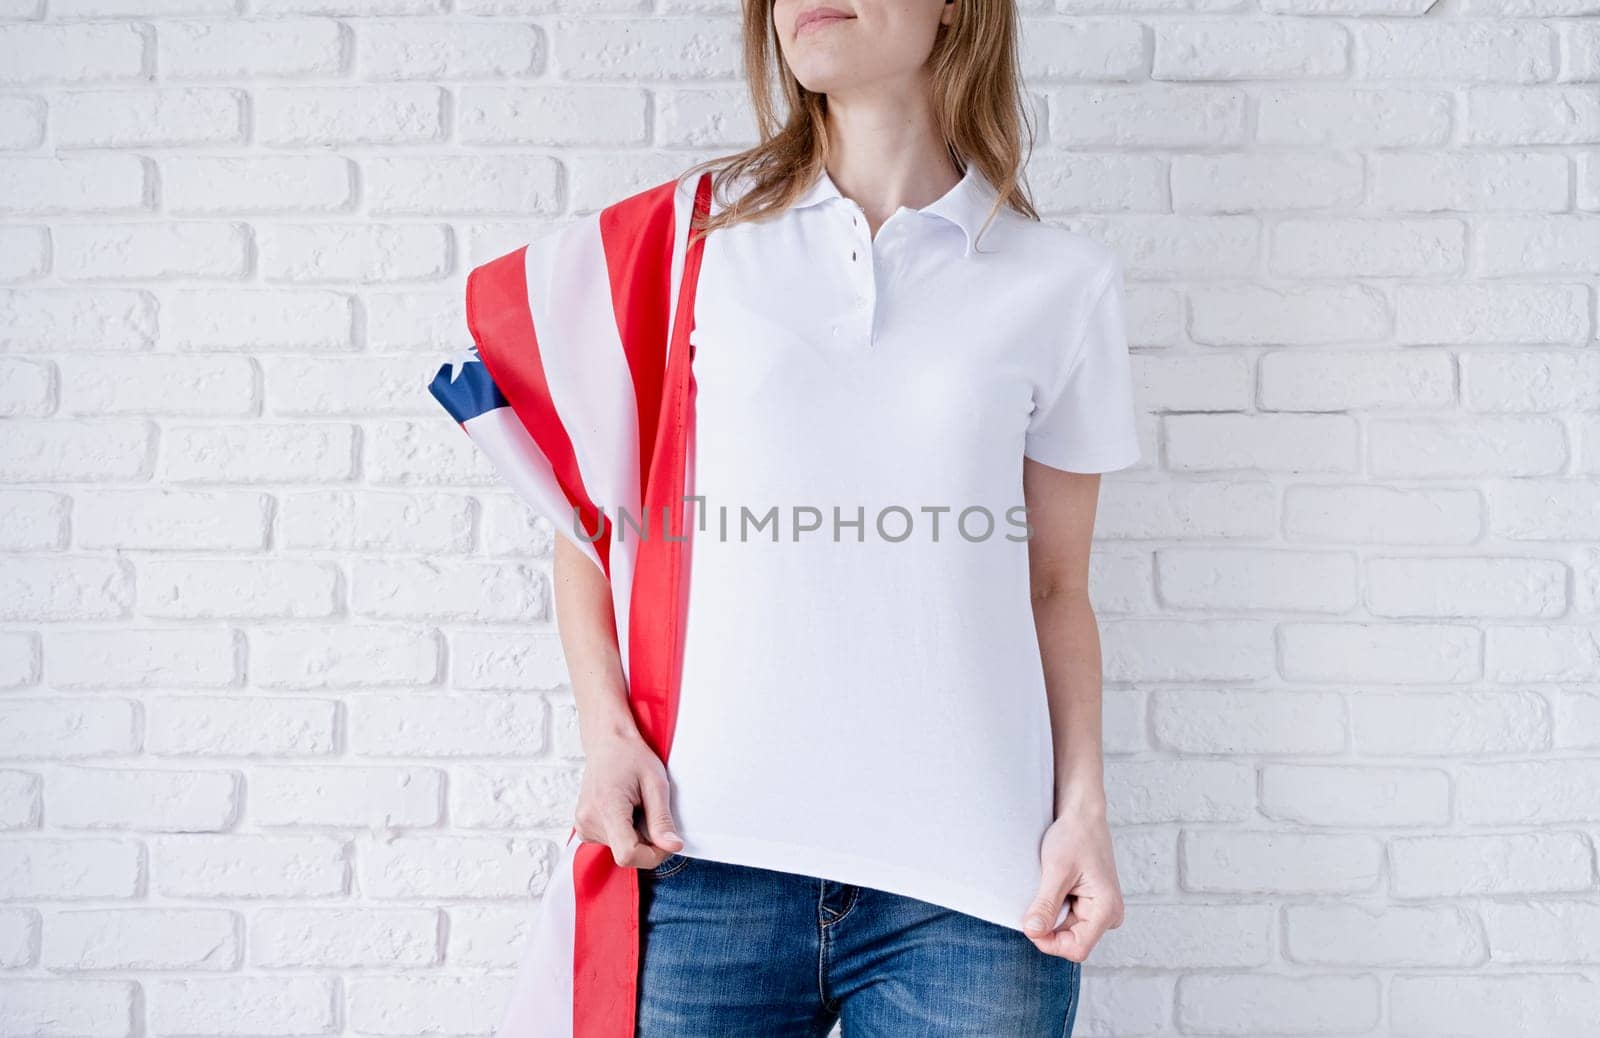 White polo shirt on woman over USA flag background, mockup design by Desperada